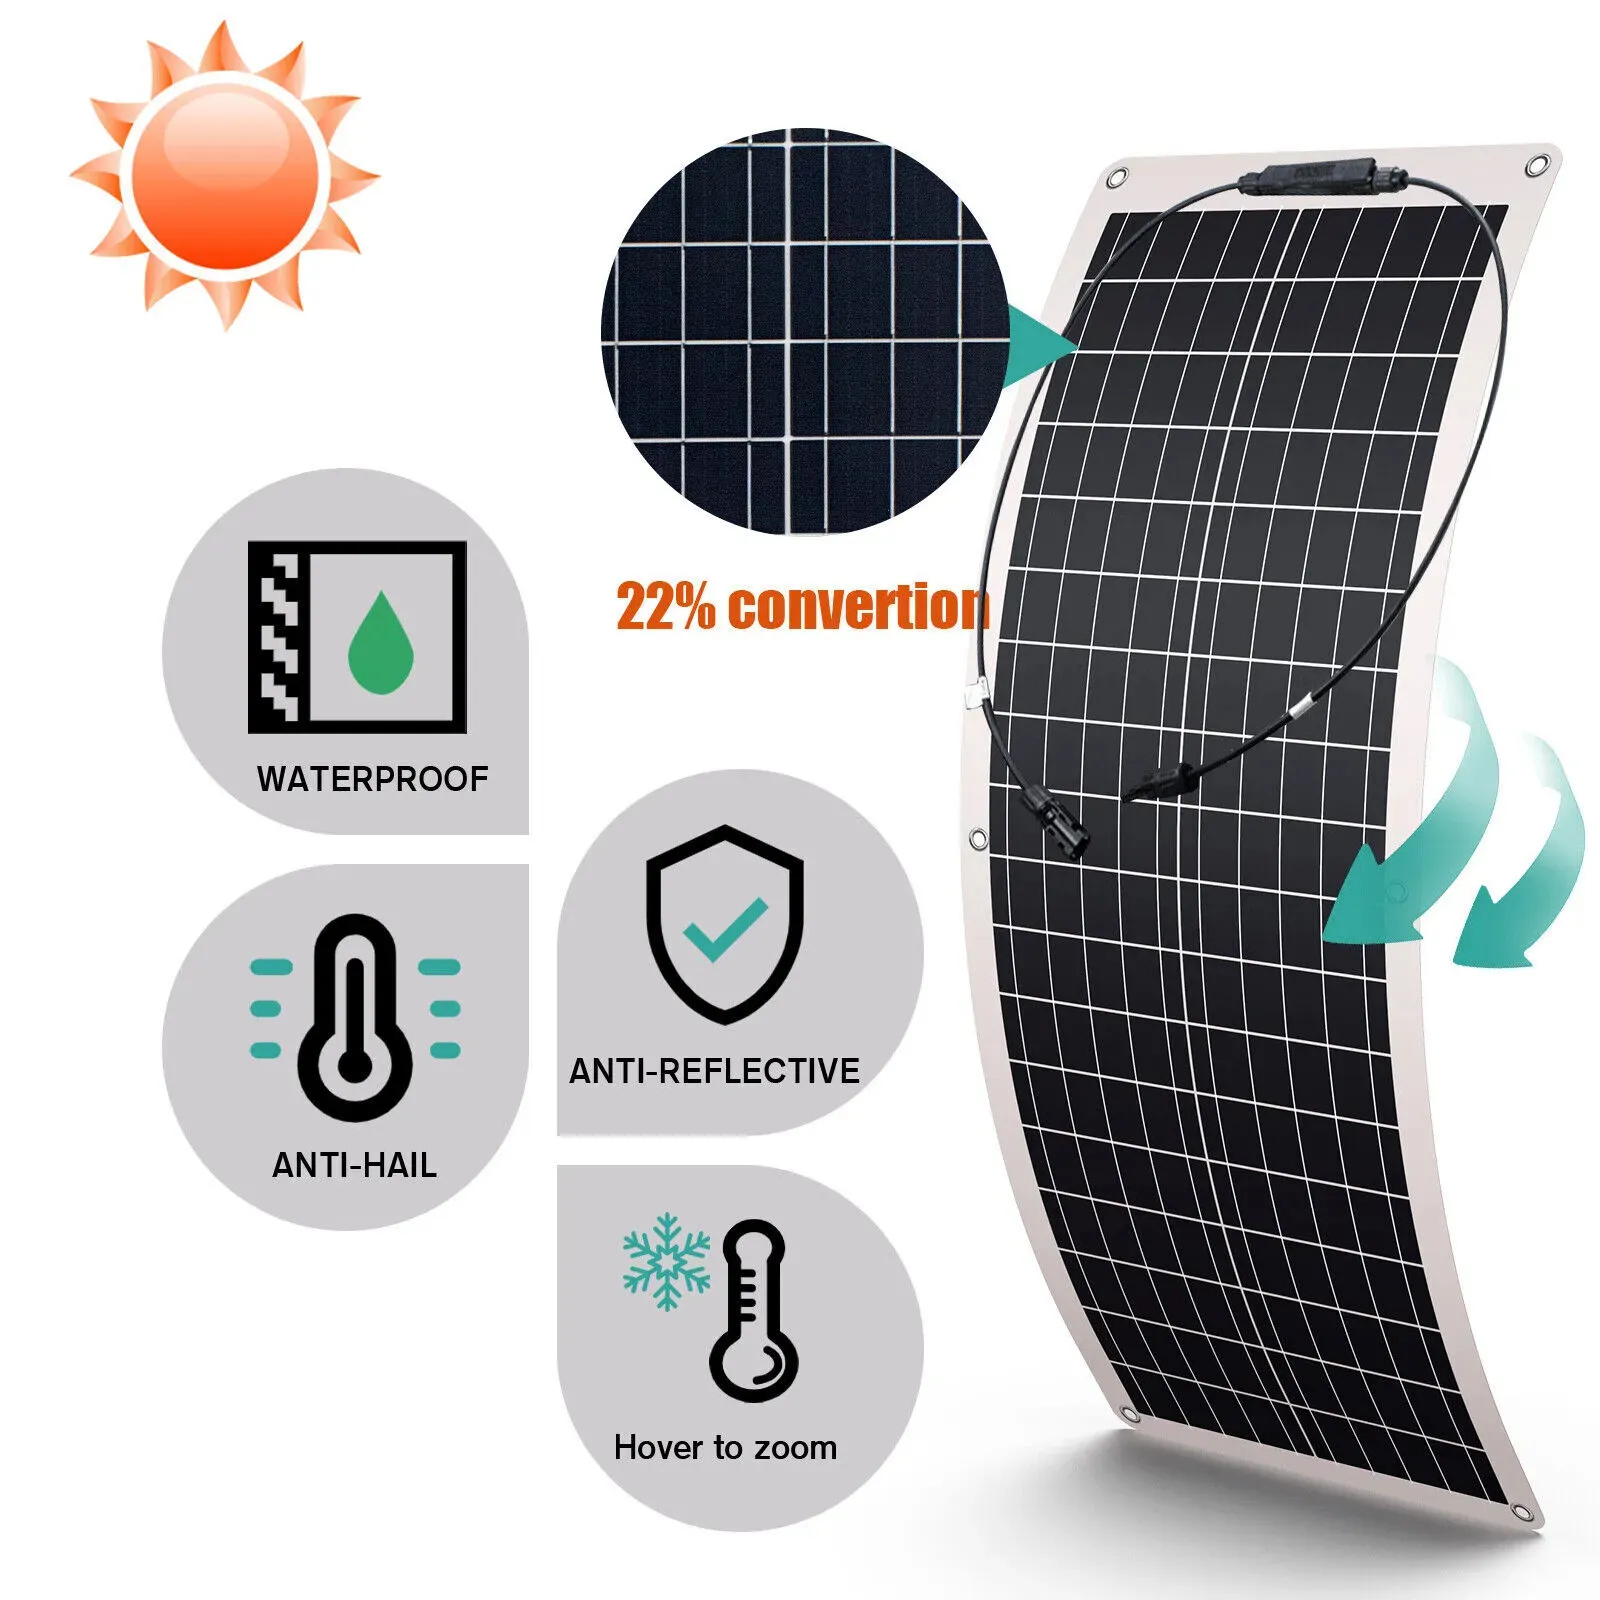 200 W flexibles Photovoltaik-Solarpanel ETFE mit dünnschicht 100 W 210 W 310 W 410 W 525 W Solarpanels im Großhandel verfügbar